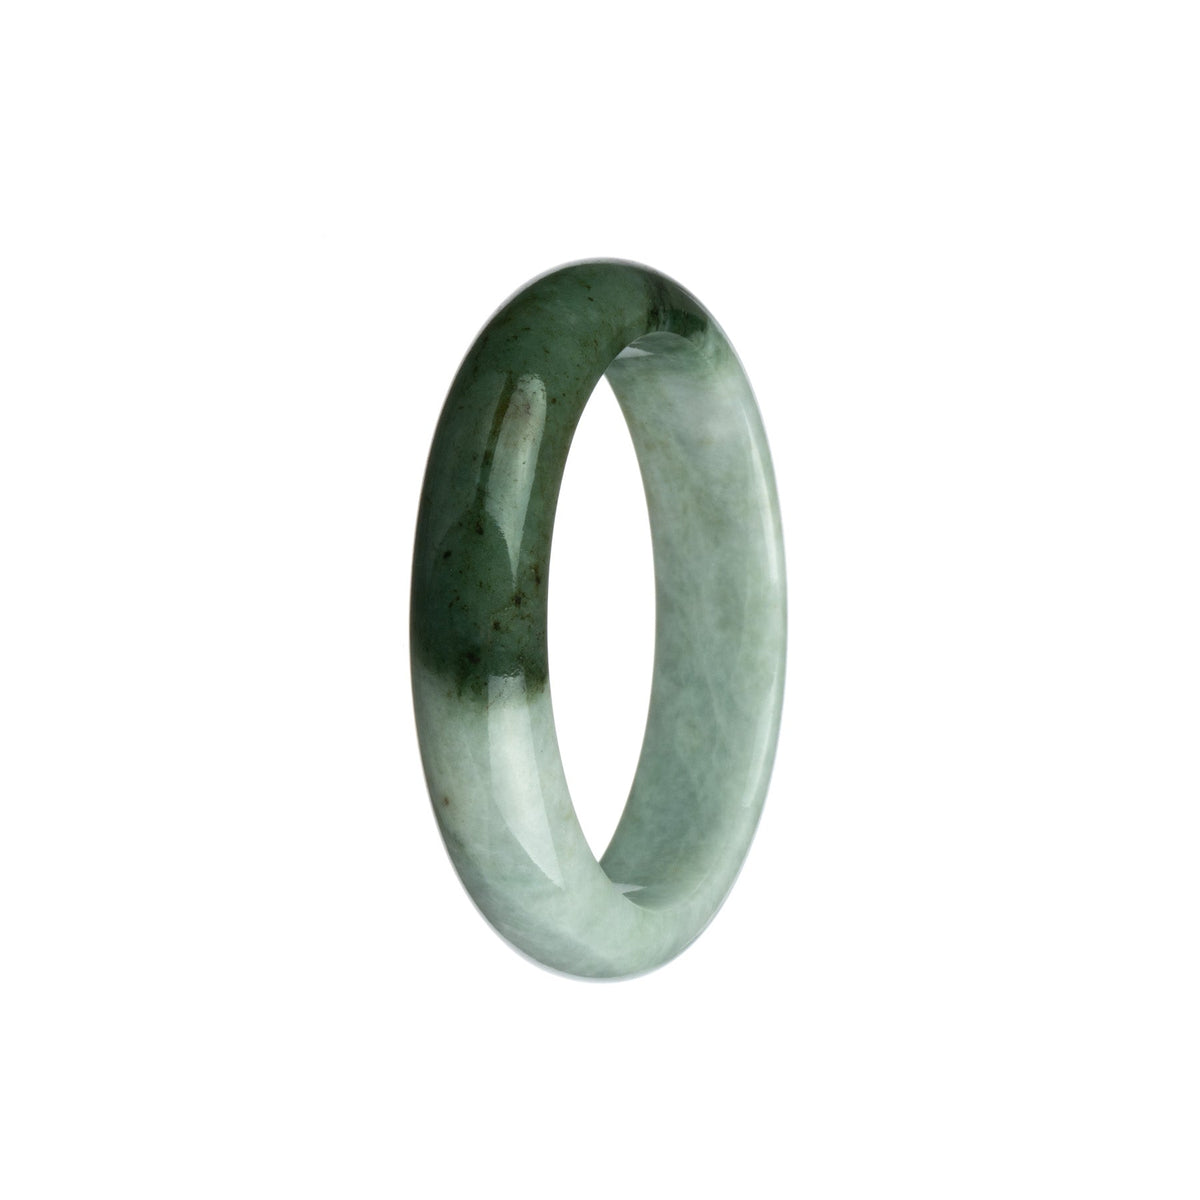 Genuine Natural Pale Green with Olive Green Jadeite Bangle Bracelet - 52mm Half Moon